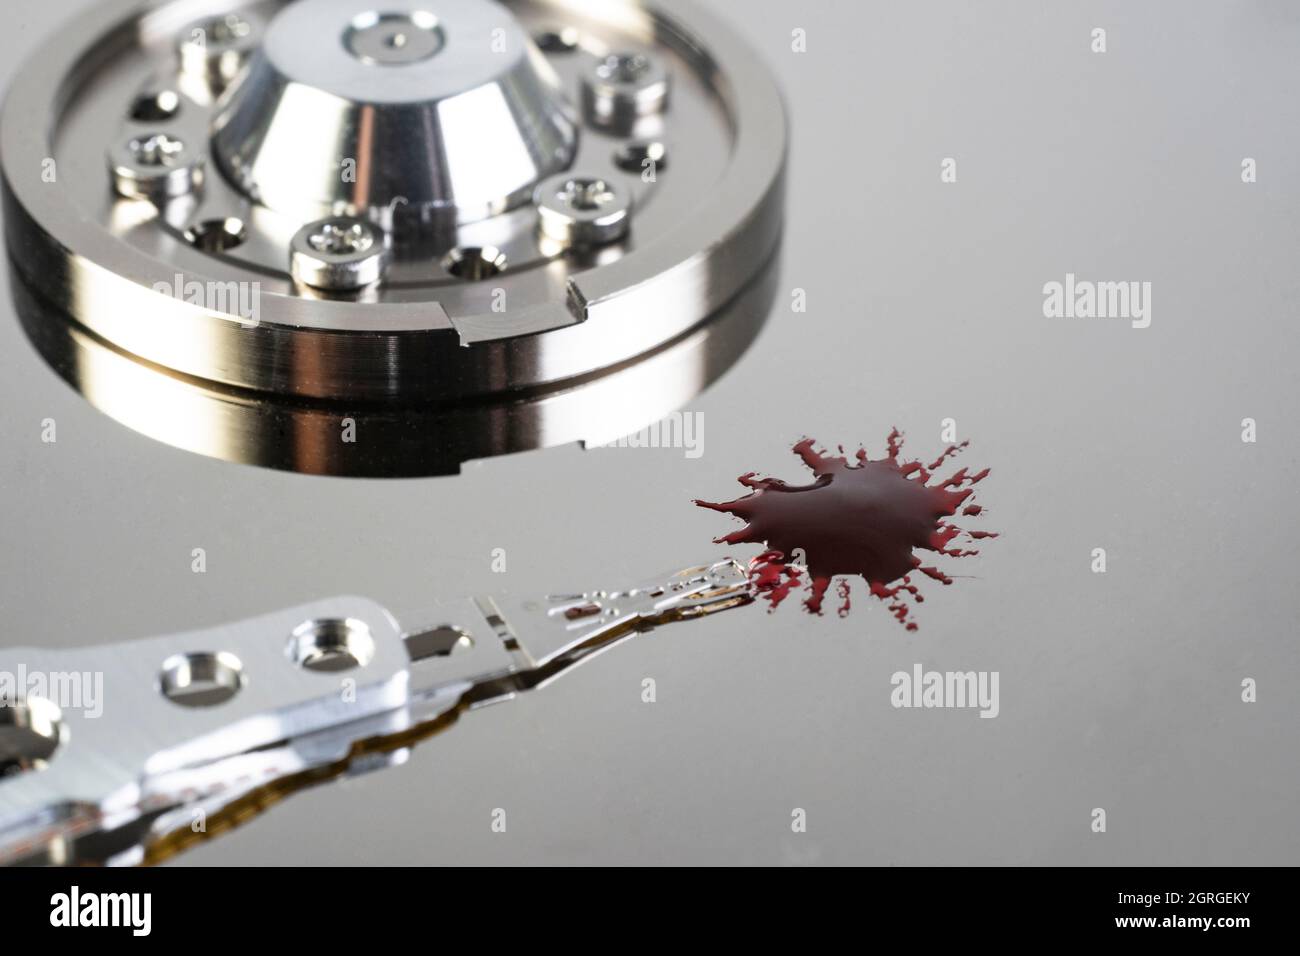 Spikes virusor Tropfen Blut, auf einer Festplatte Oberfläche, kreative Konzept, selektive Fokus Makro Stockfoto